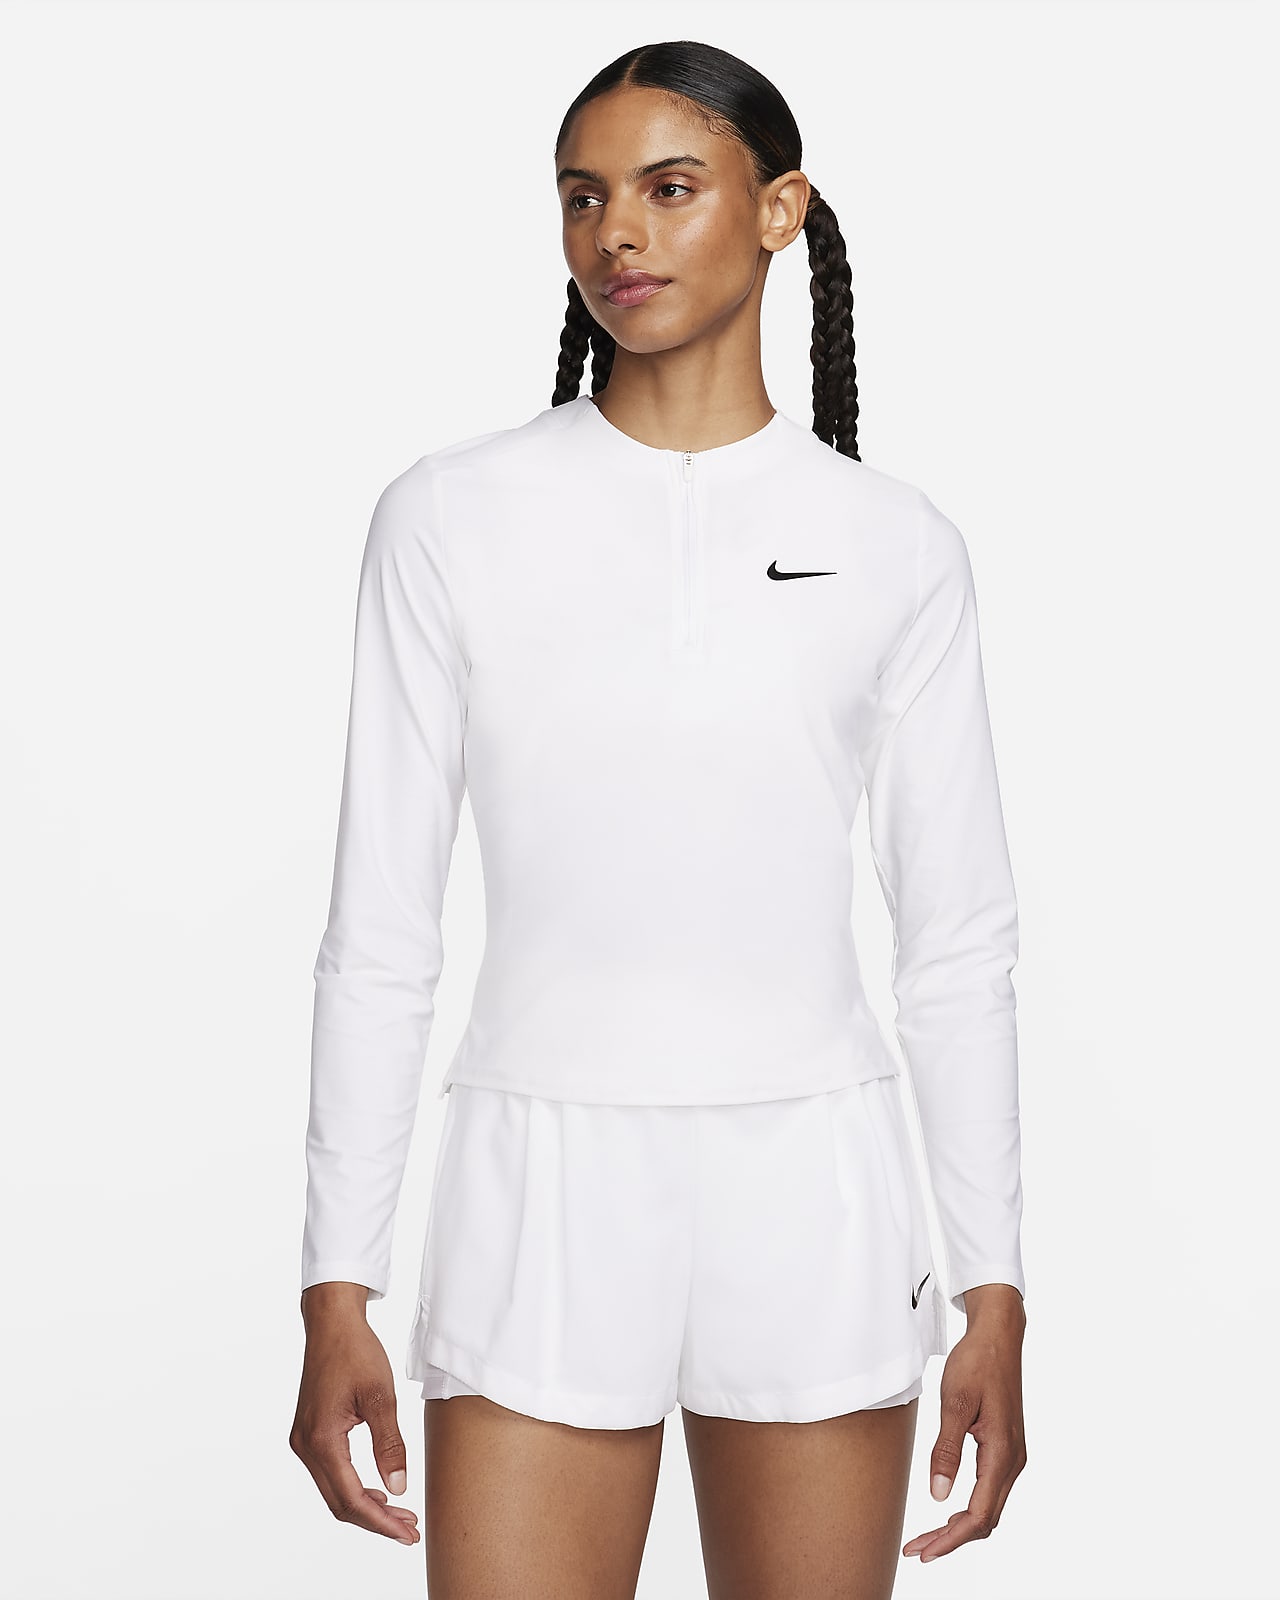 NikeCourt Advantage Dri-FIT tennis mellomlag med glidelås i halsen til dame